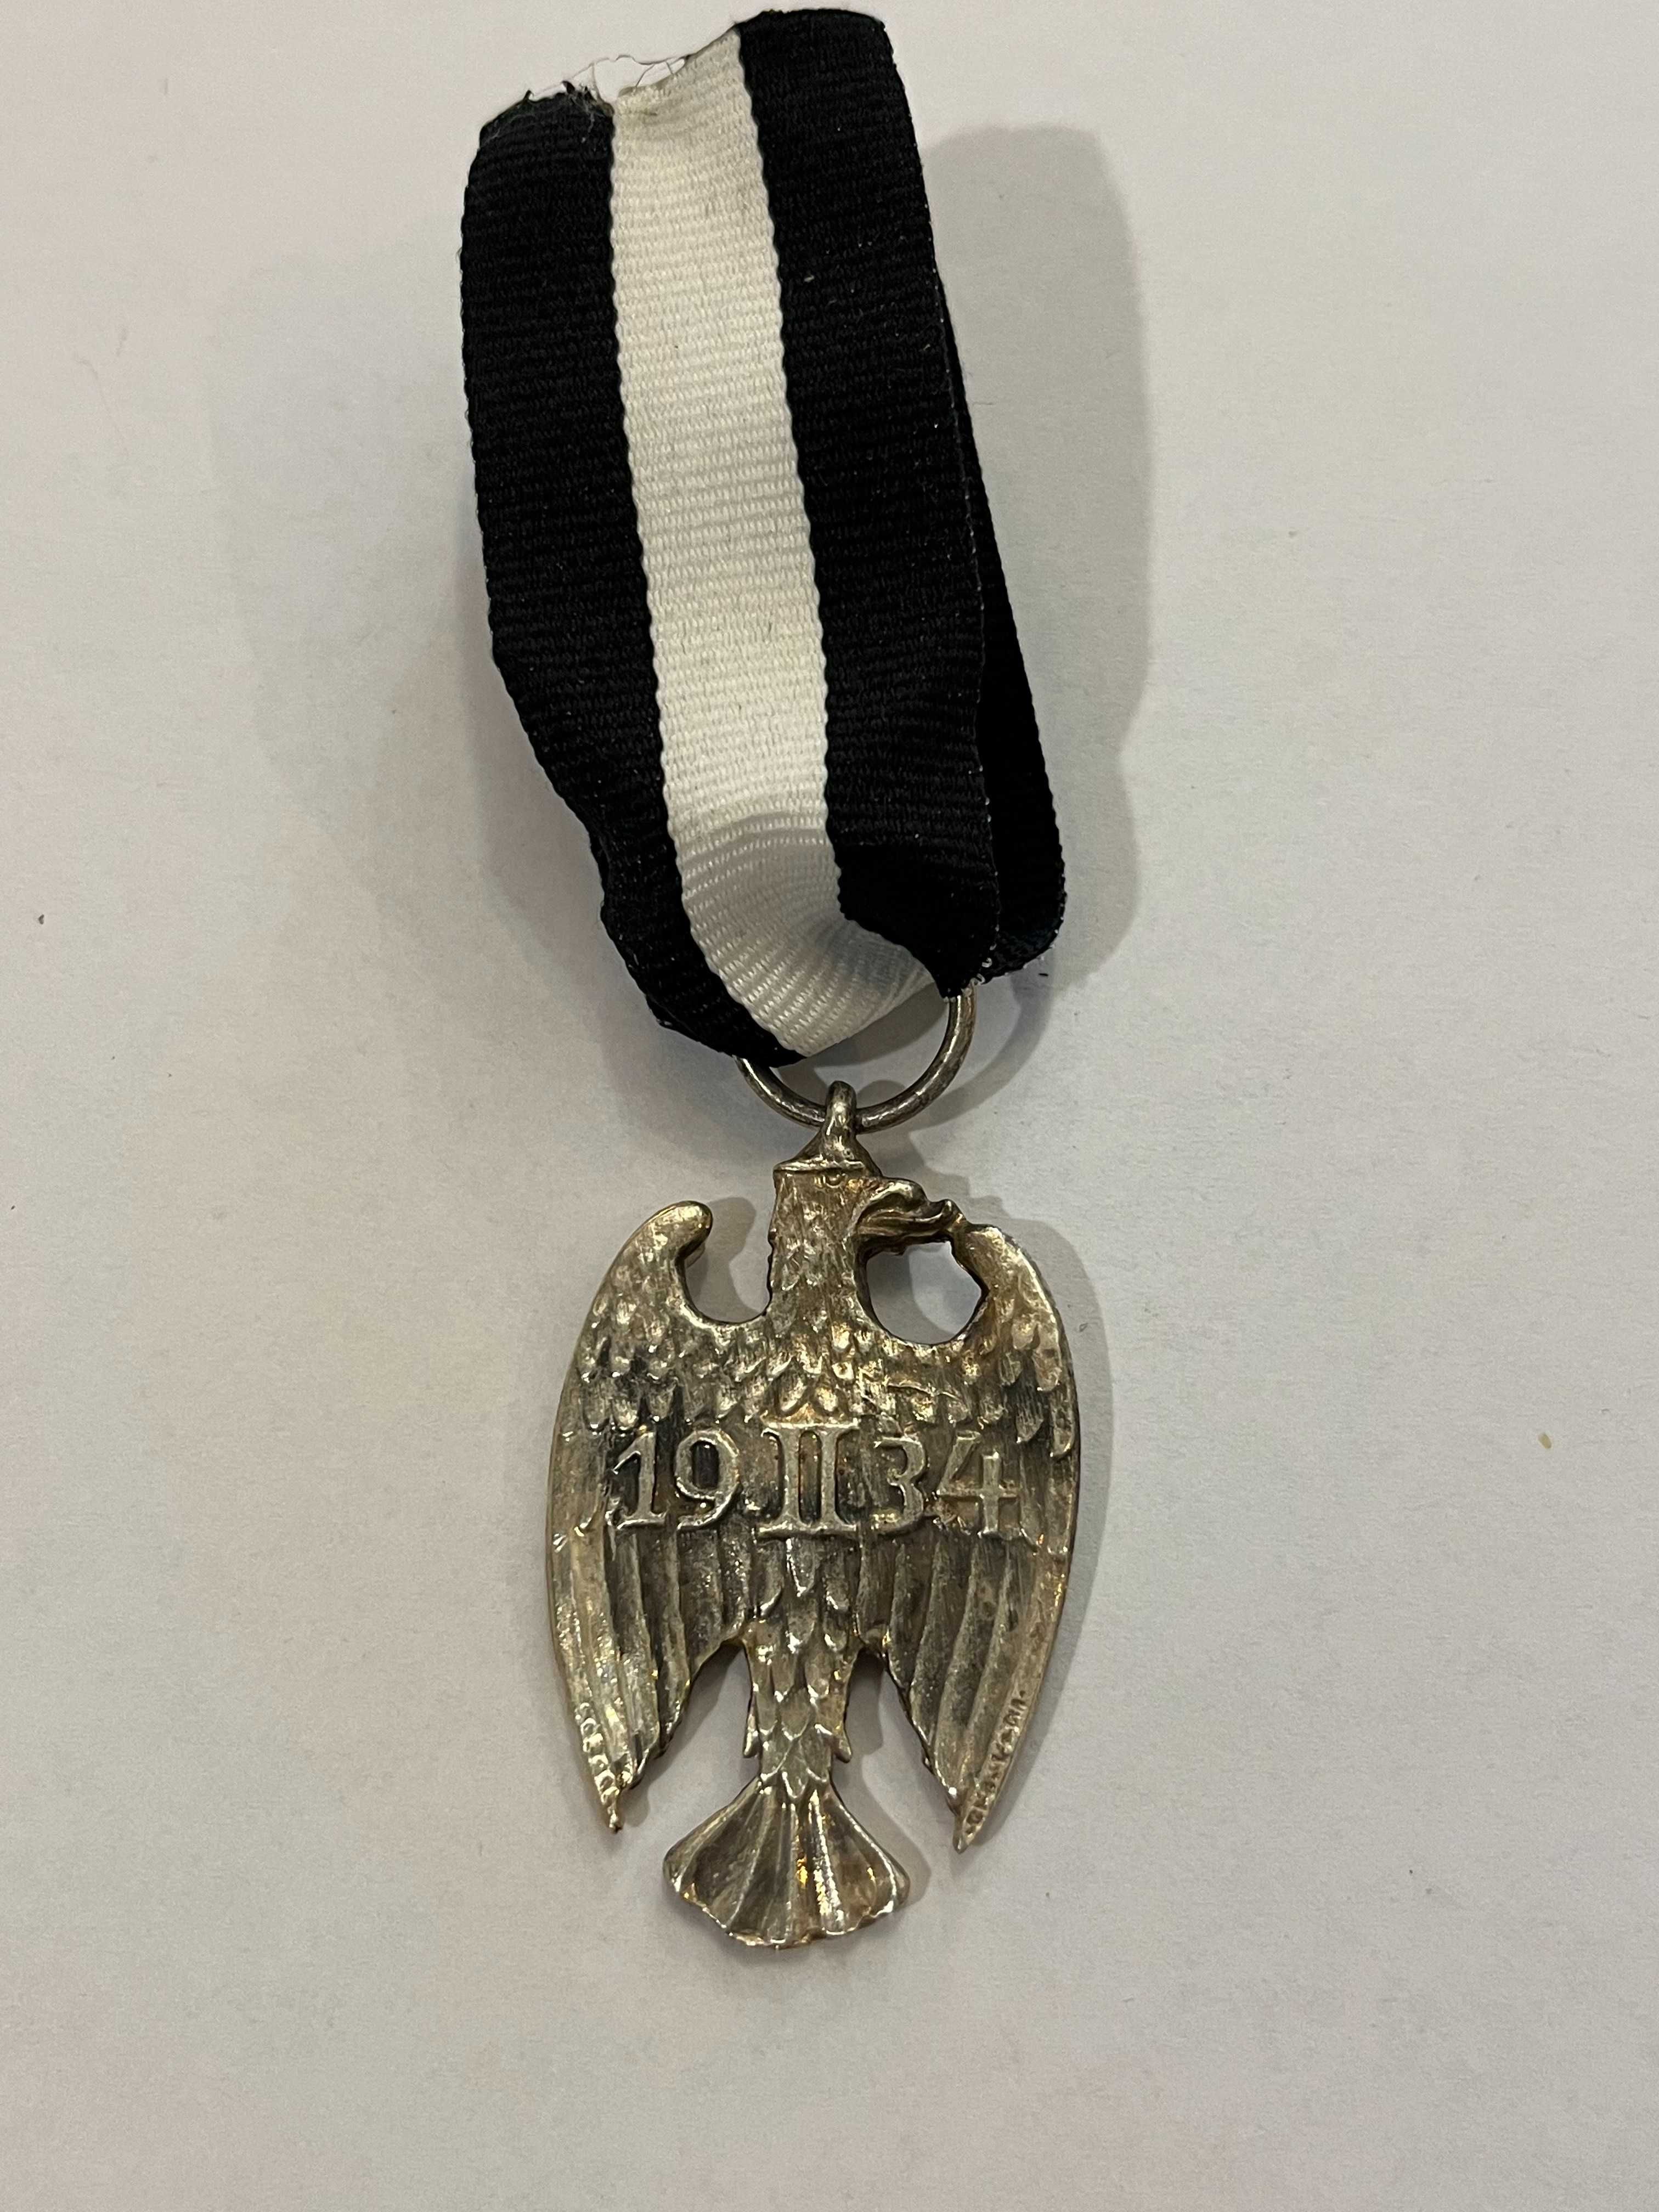 Niemiecka straż krajowa, medal 19 II 34